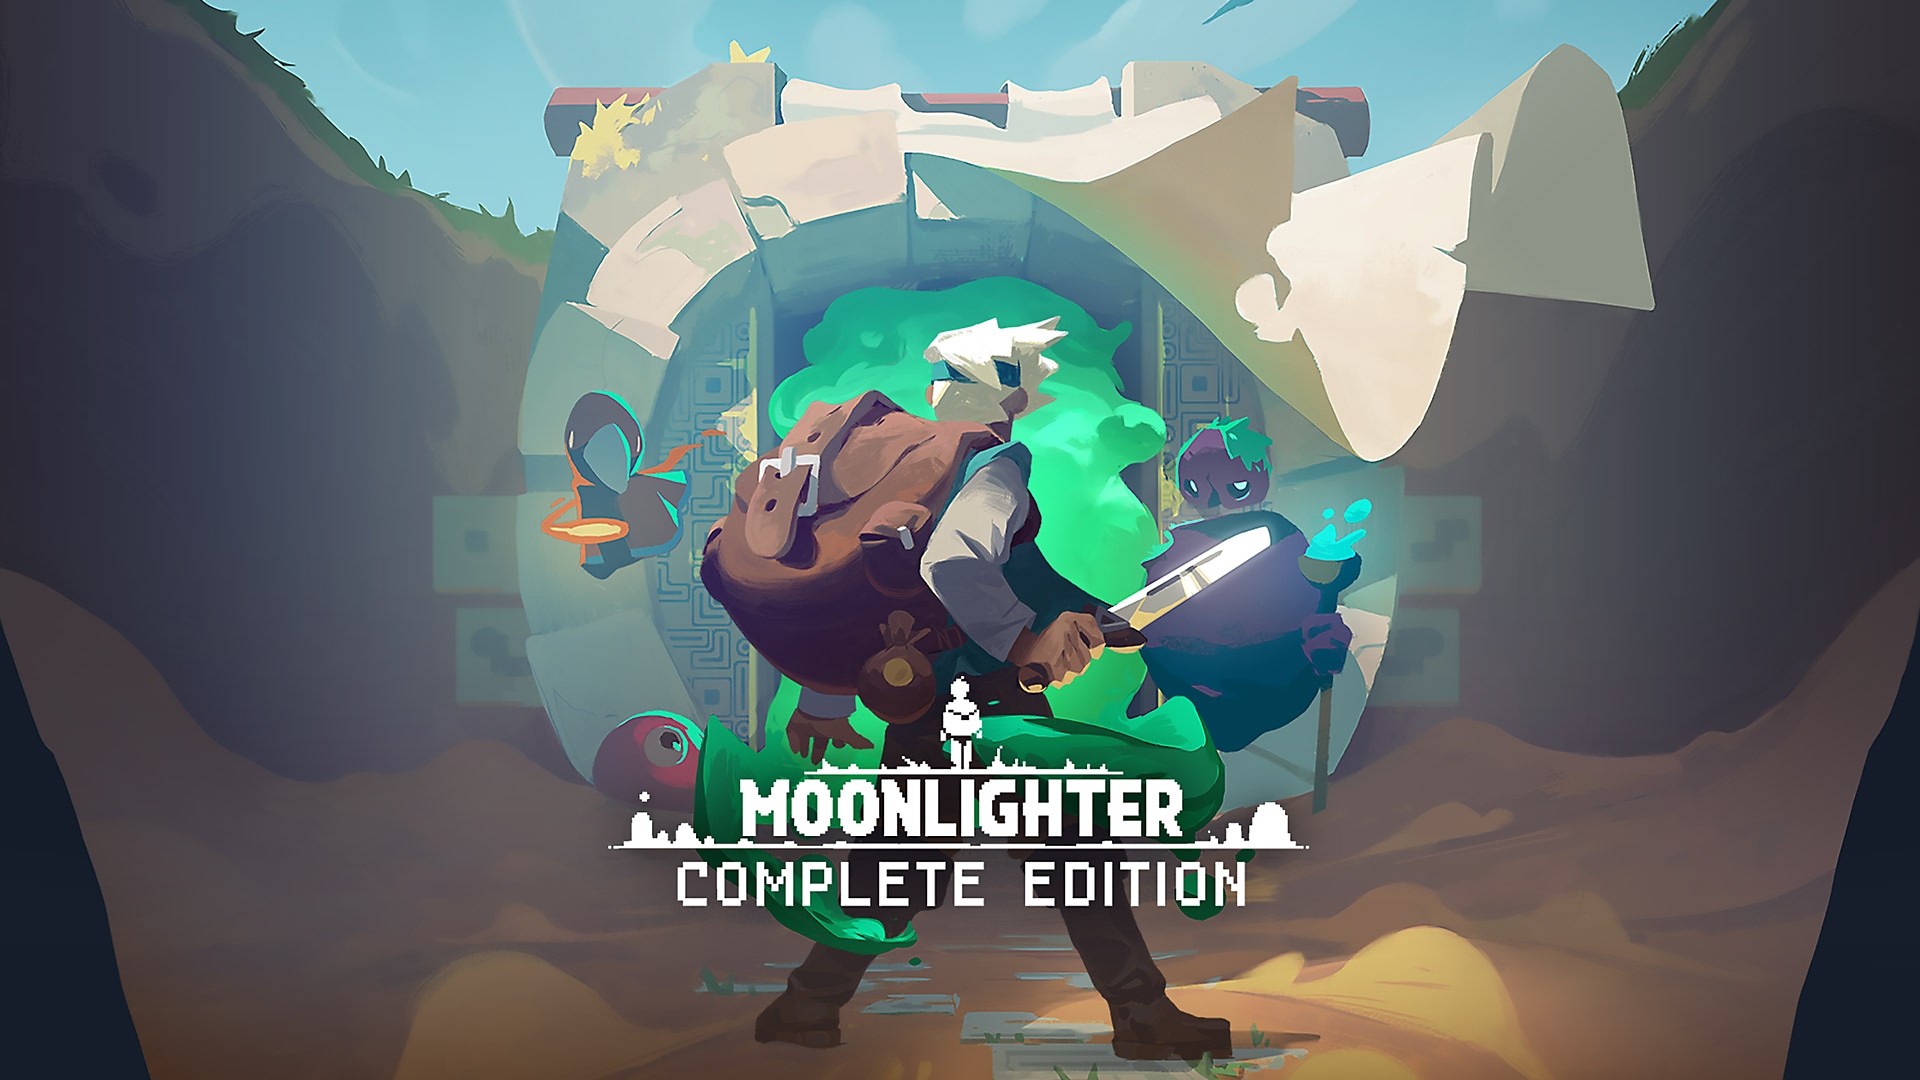 Moonlighter - PSX 2017: Gameplay Trailer | PS4